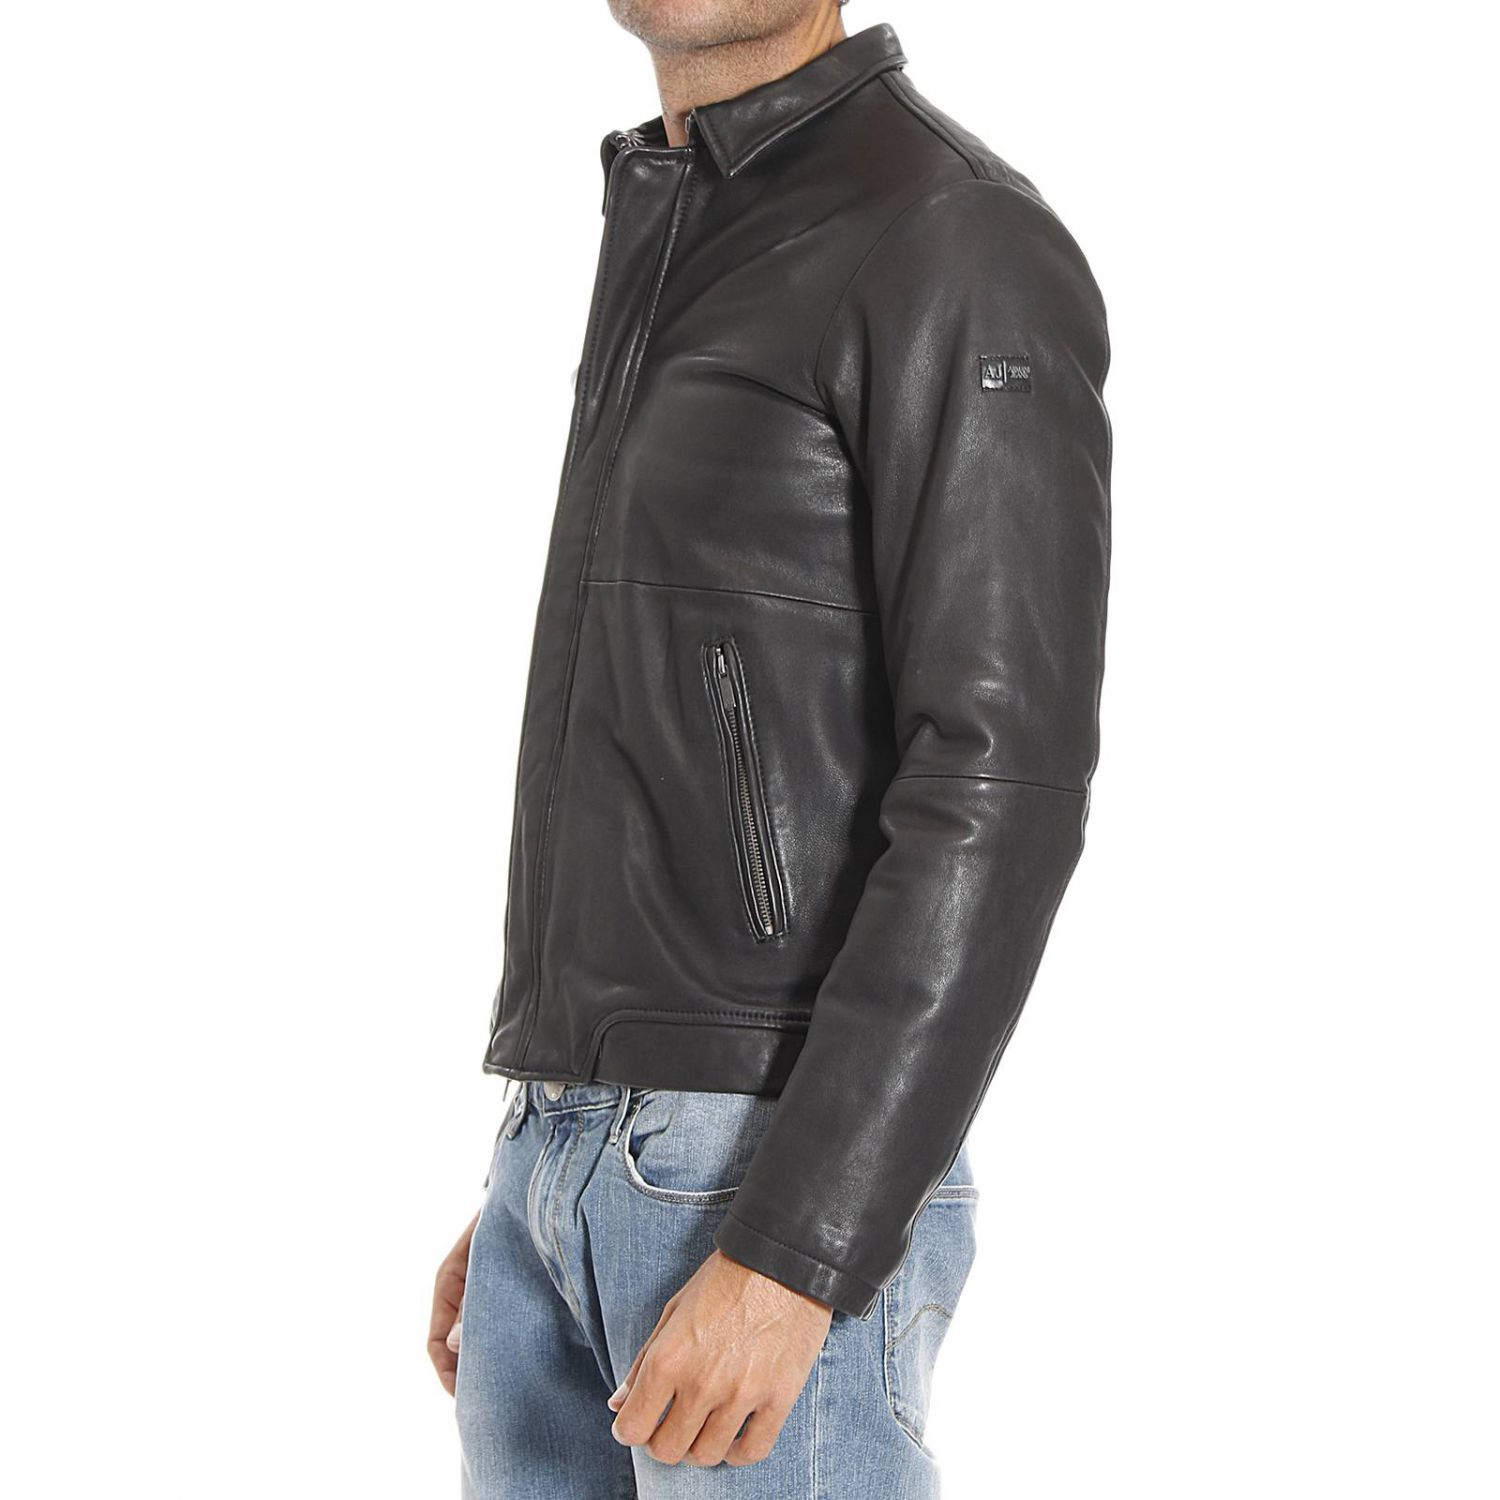 Armani Jeans Spread-Collar Leather Biker Jacket in Black for Men - Lyst